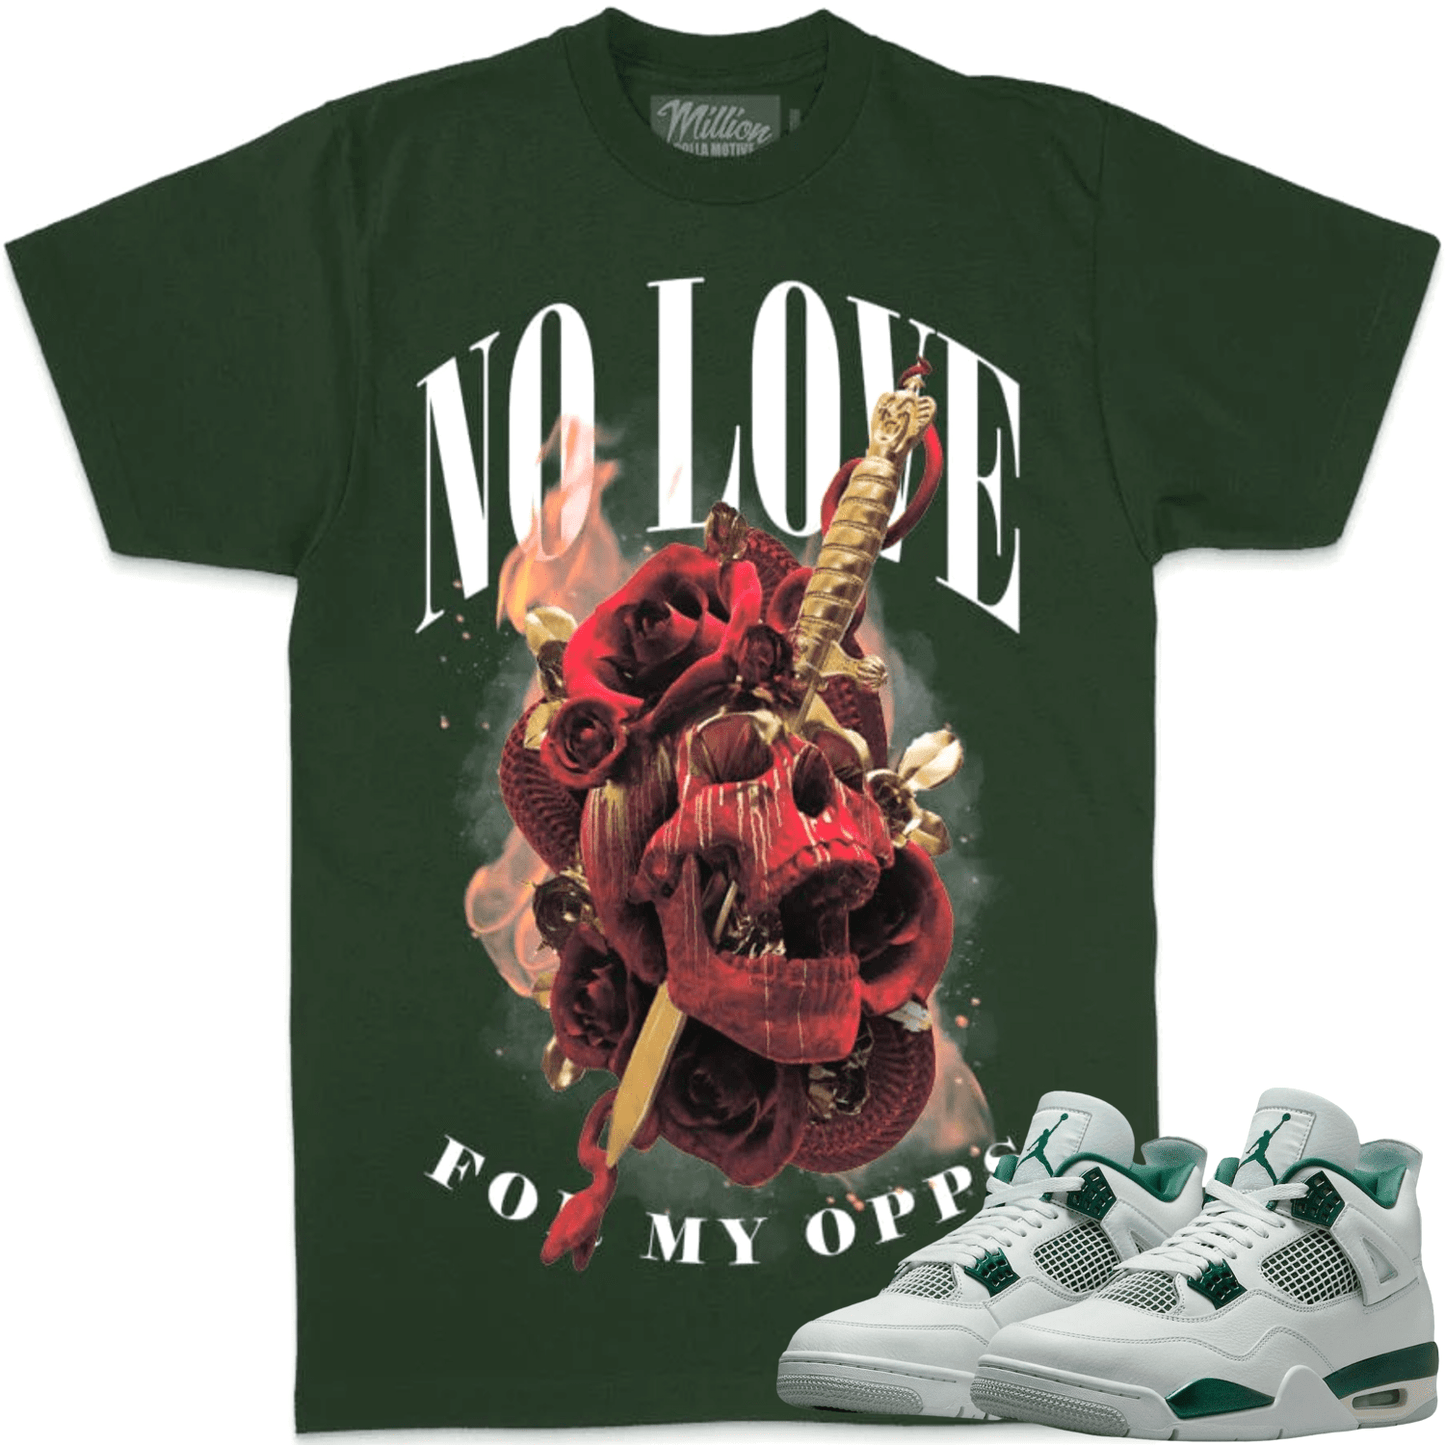 Oxidized Green 4s Shirt - Jordan 4 Oxidized Sneaker Tees - No Love for Opps